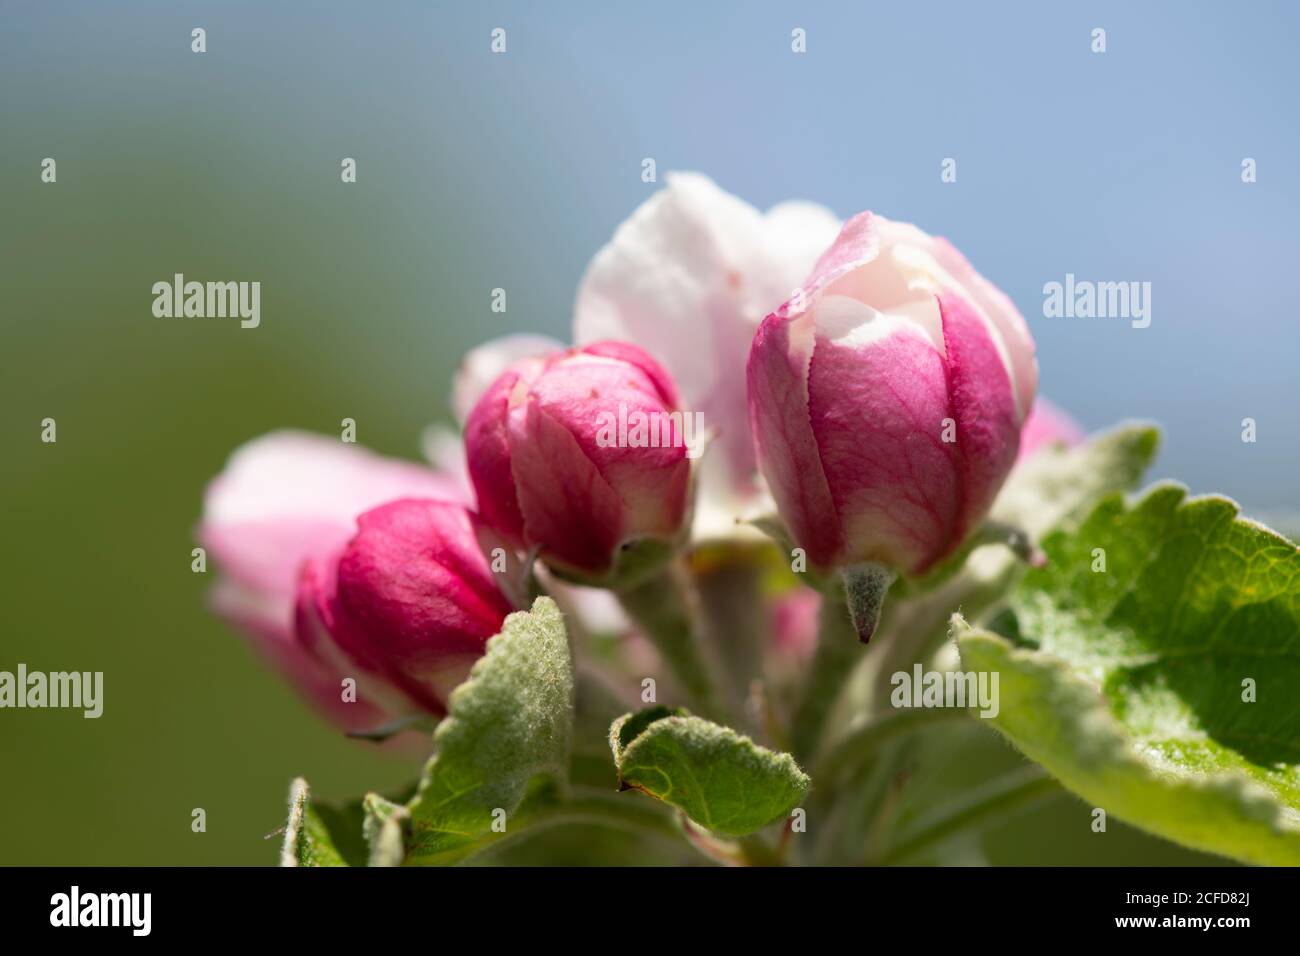 Apple blossom, close-up Stock Photo